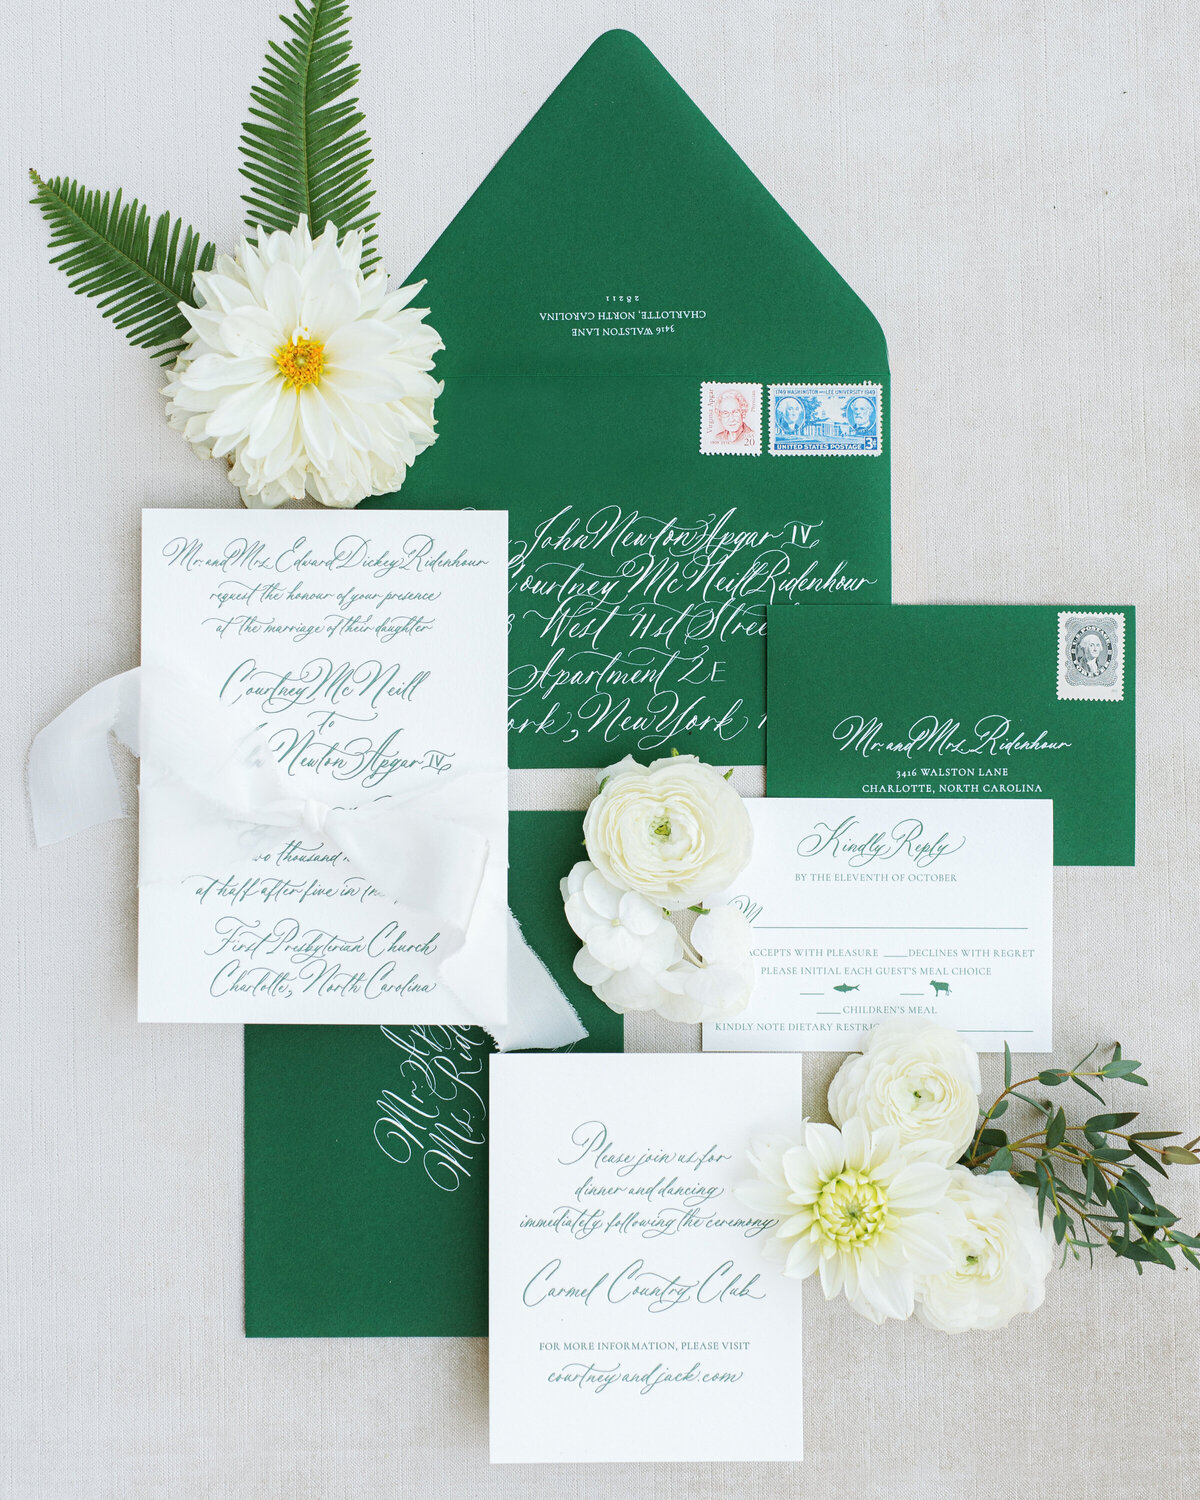 Bespoke green and white charlotte wedding invitations